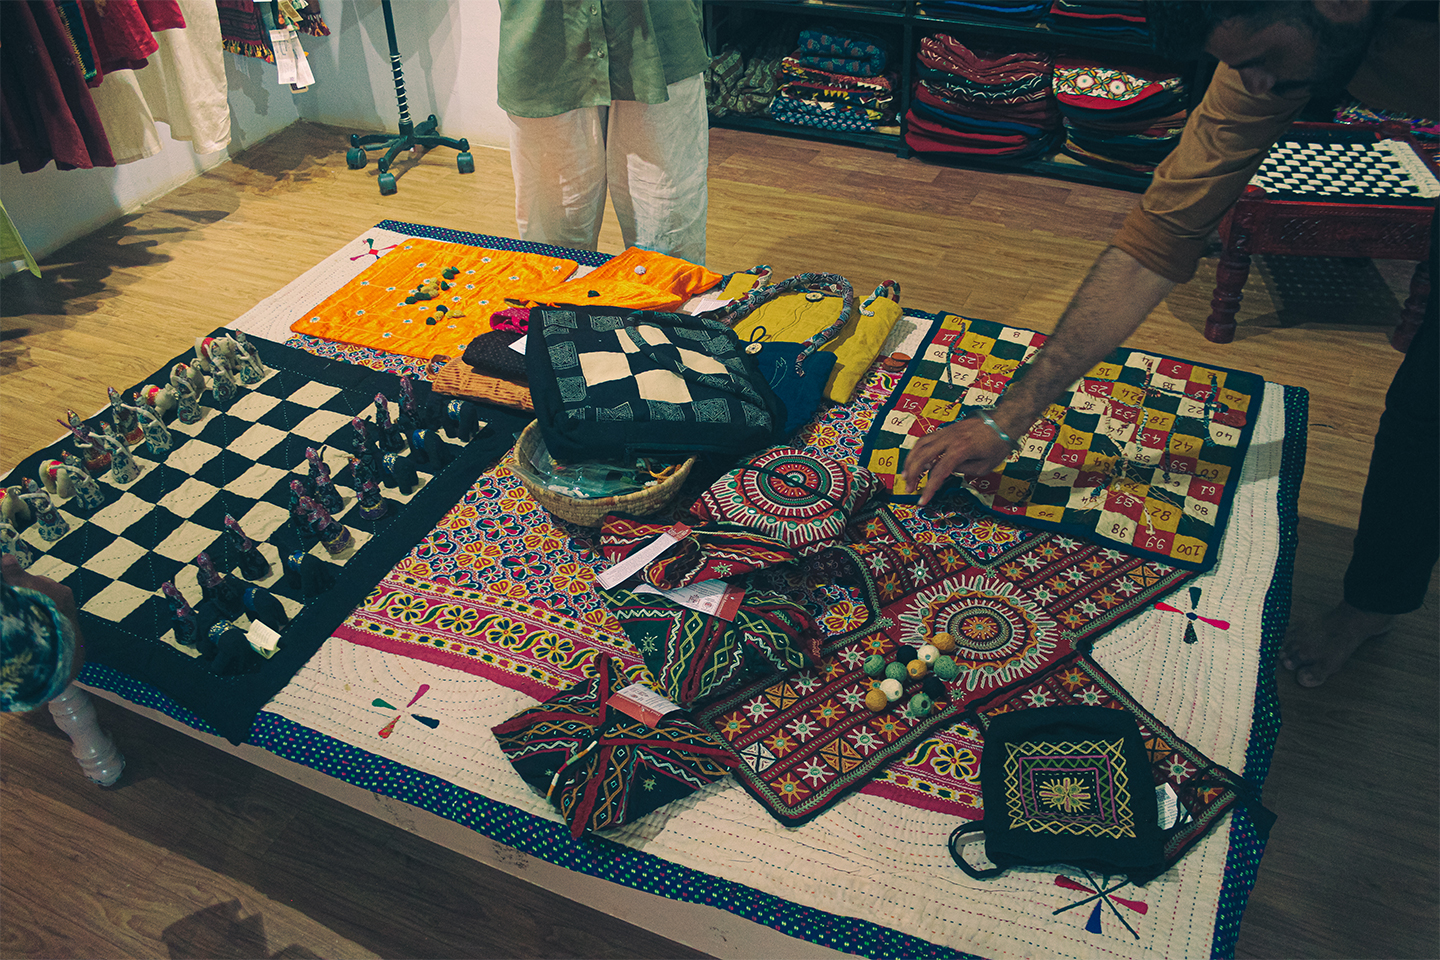 Craft work to create chessboards and more at Kala Raksha